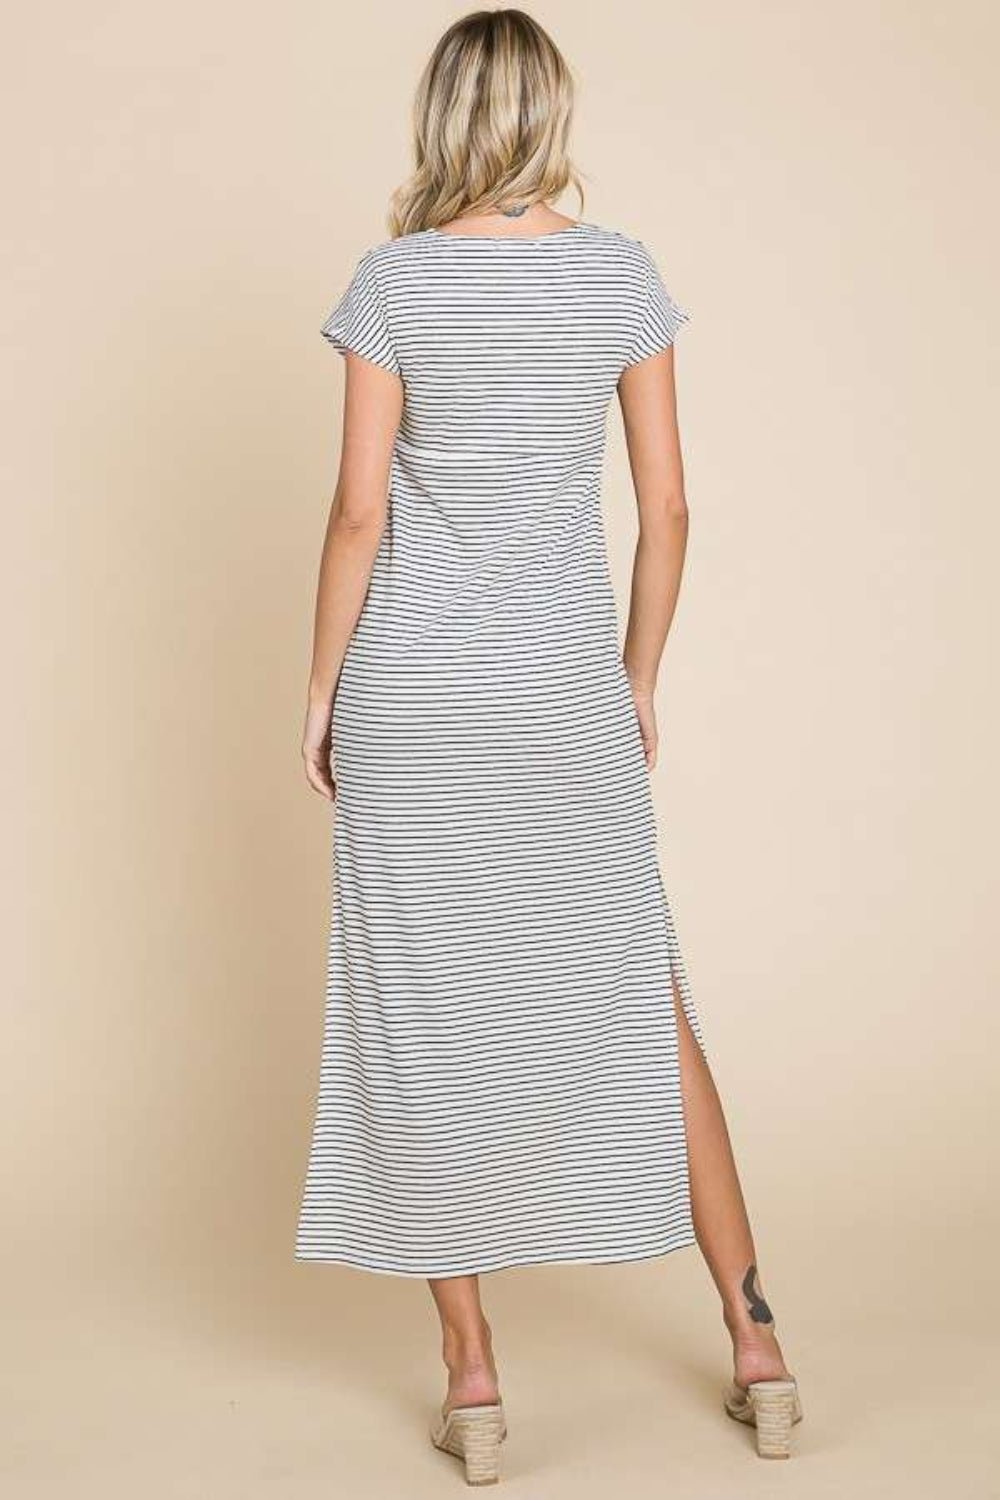 Striped Twist Front Maxi DressMaxi DressCulture Code